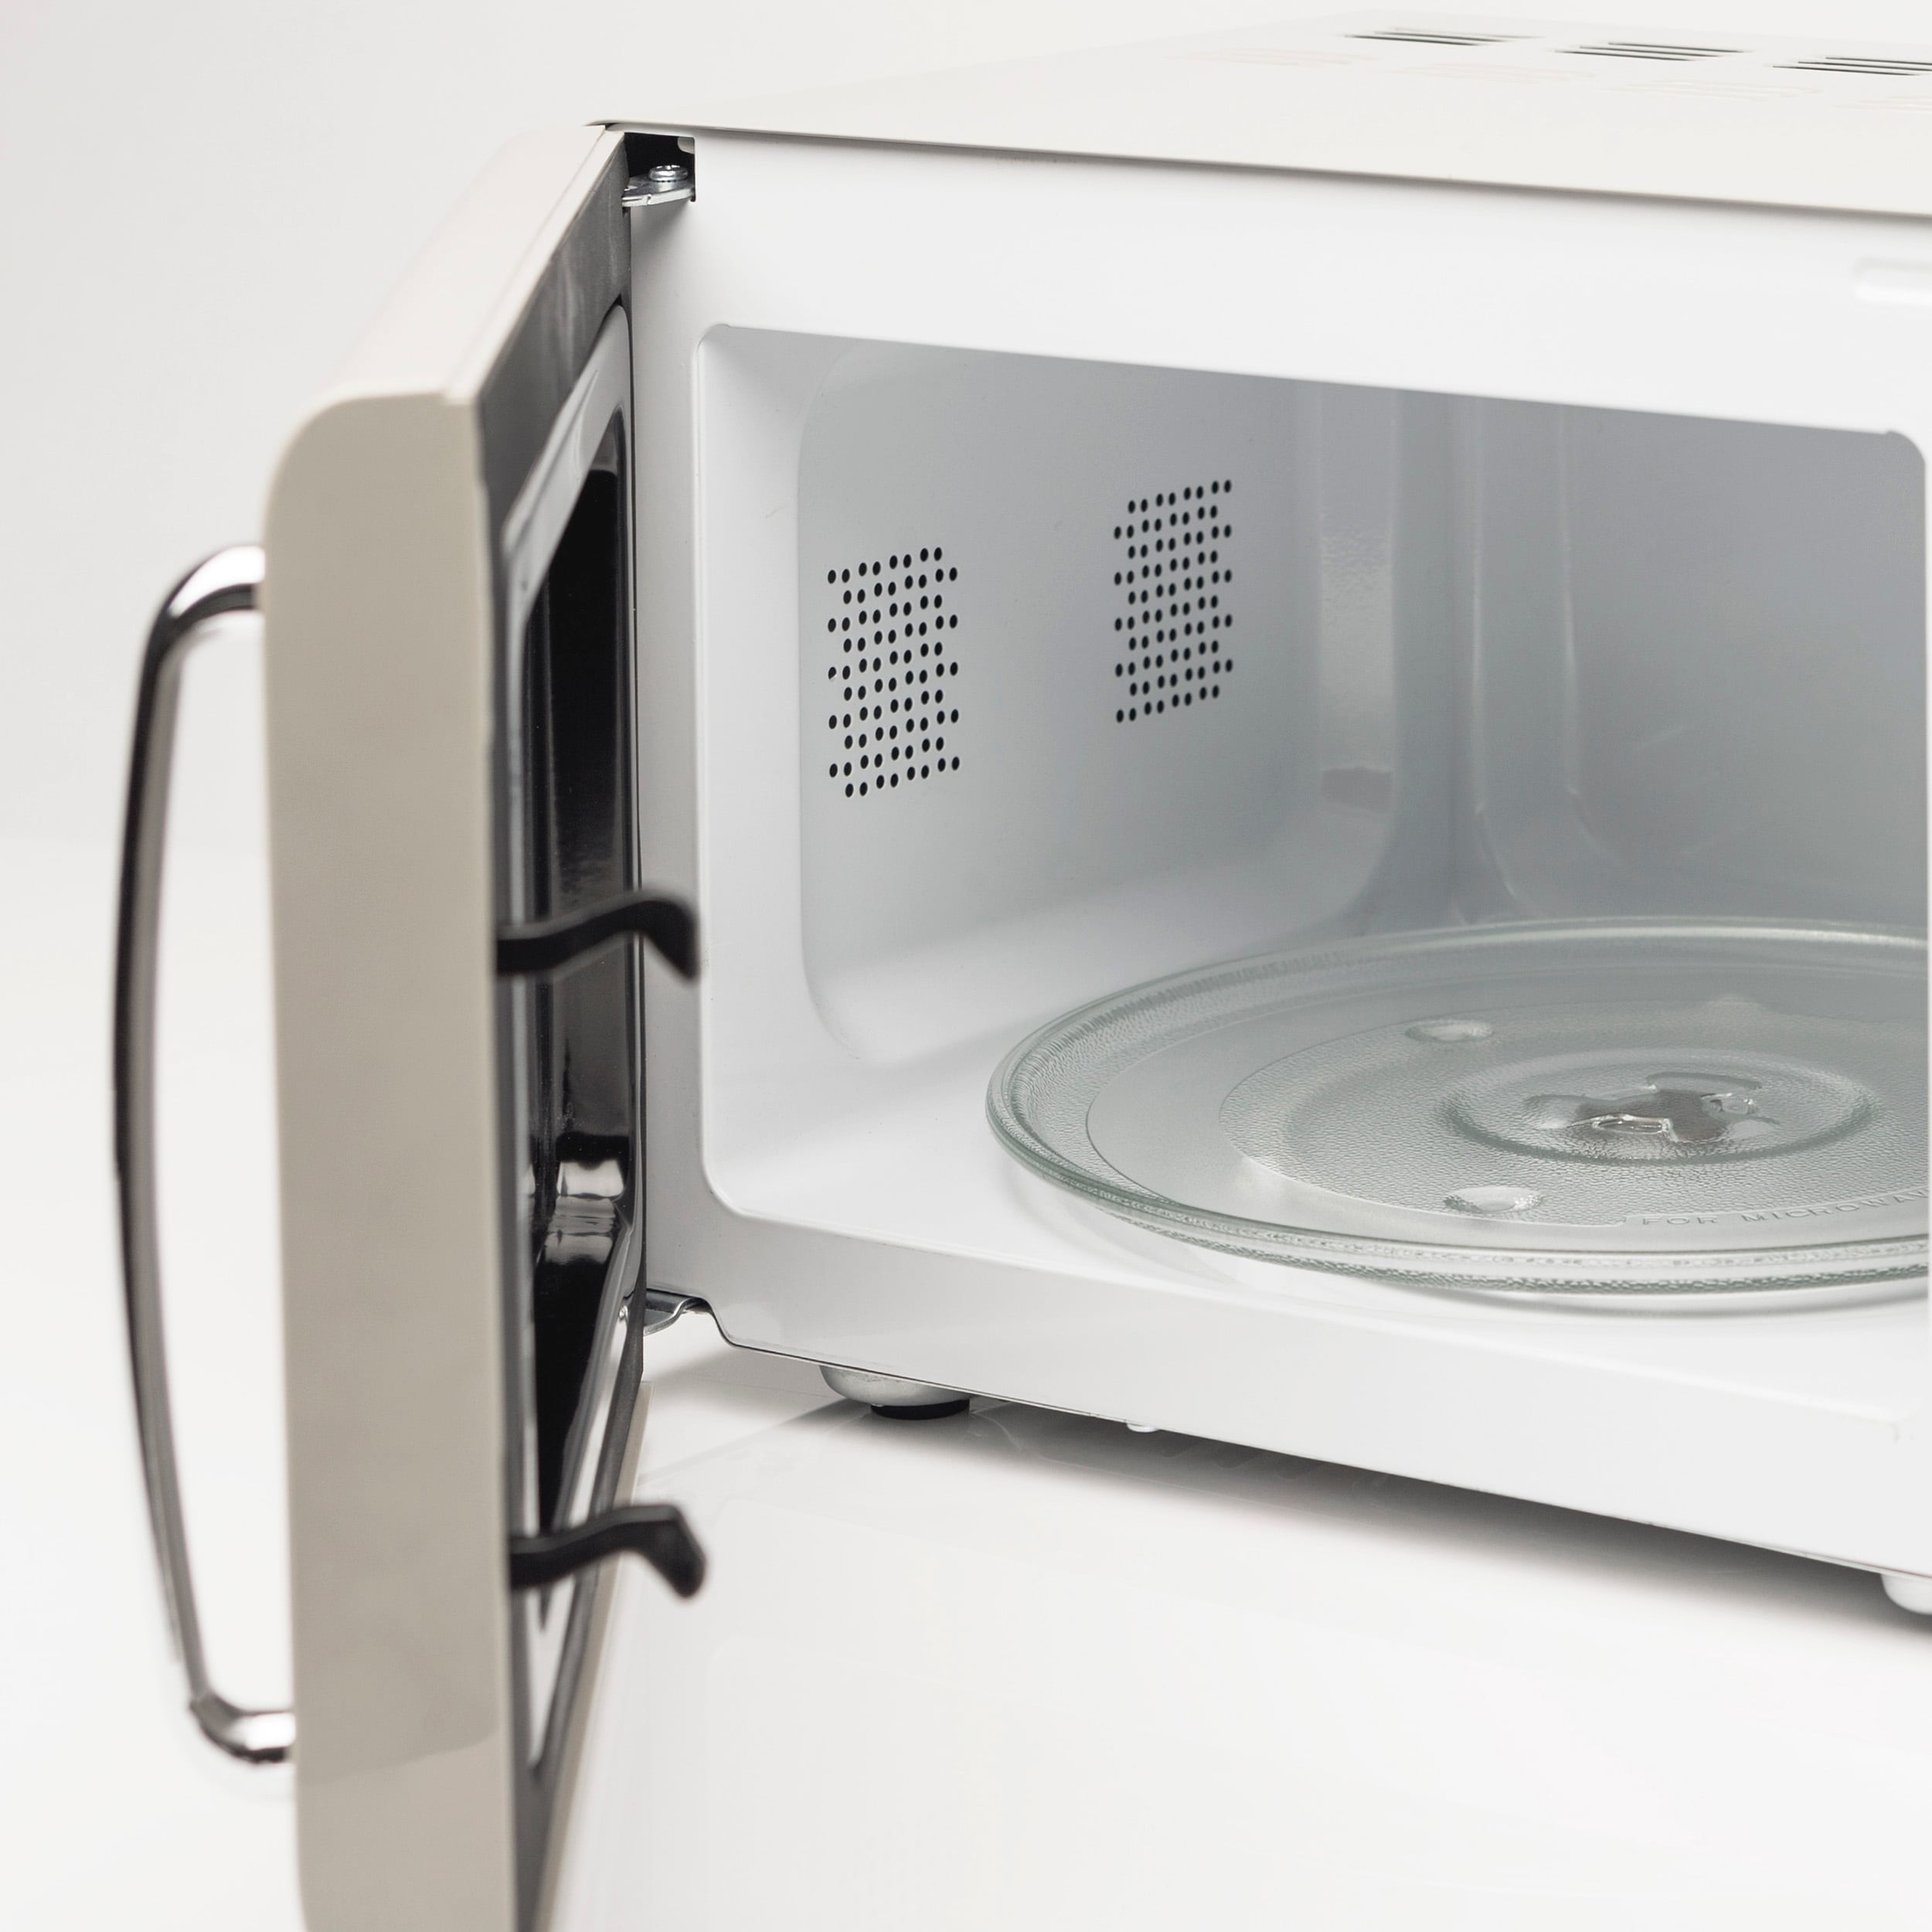 HADEN Dorchester Pebble Grey Compact Microwave + Reviews